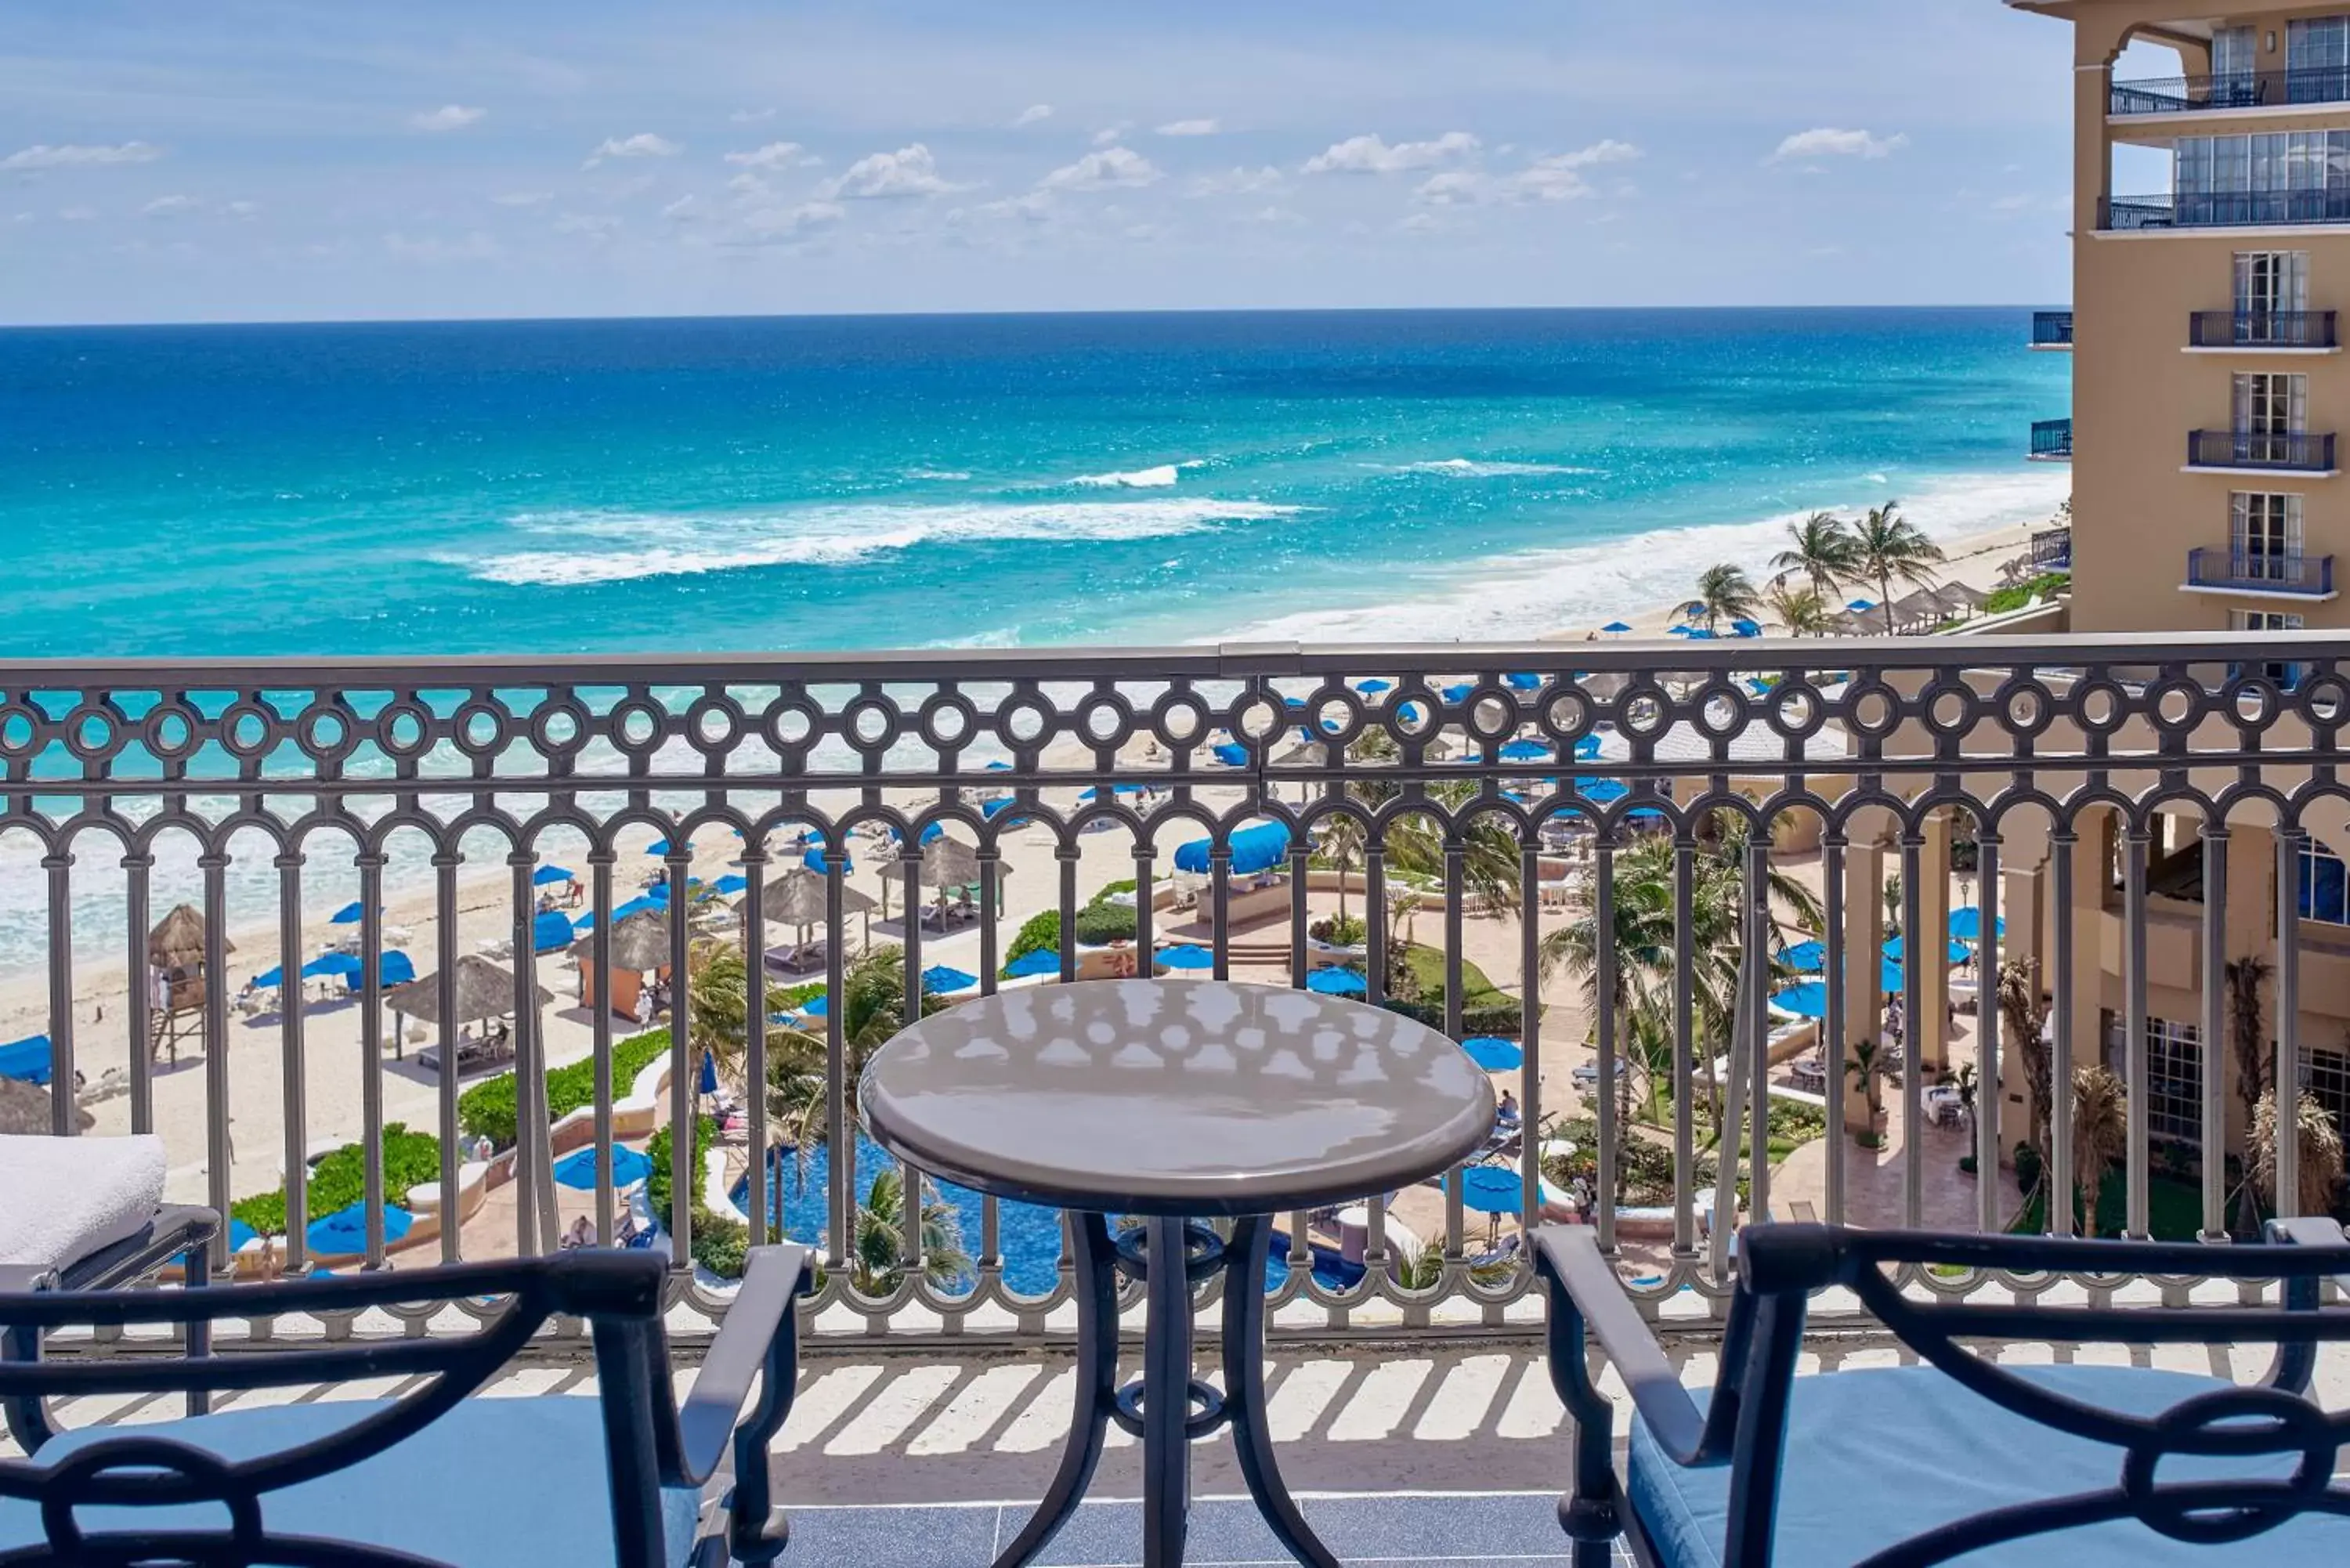 Pool view in Kempinski Hotel Cancun